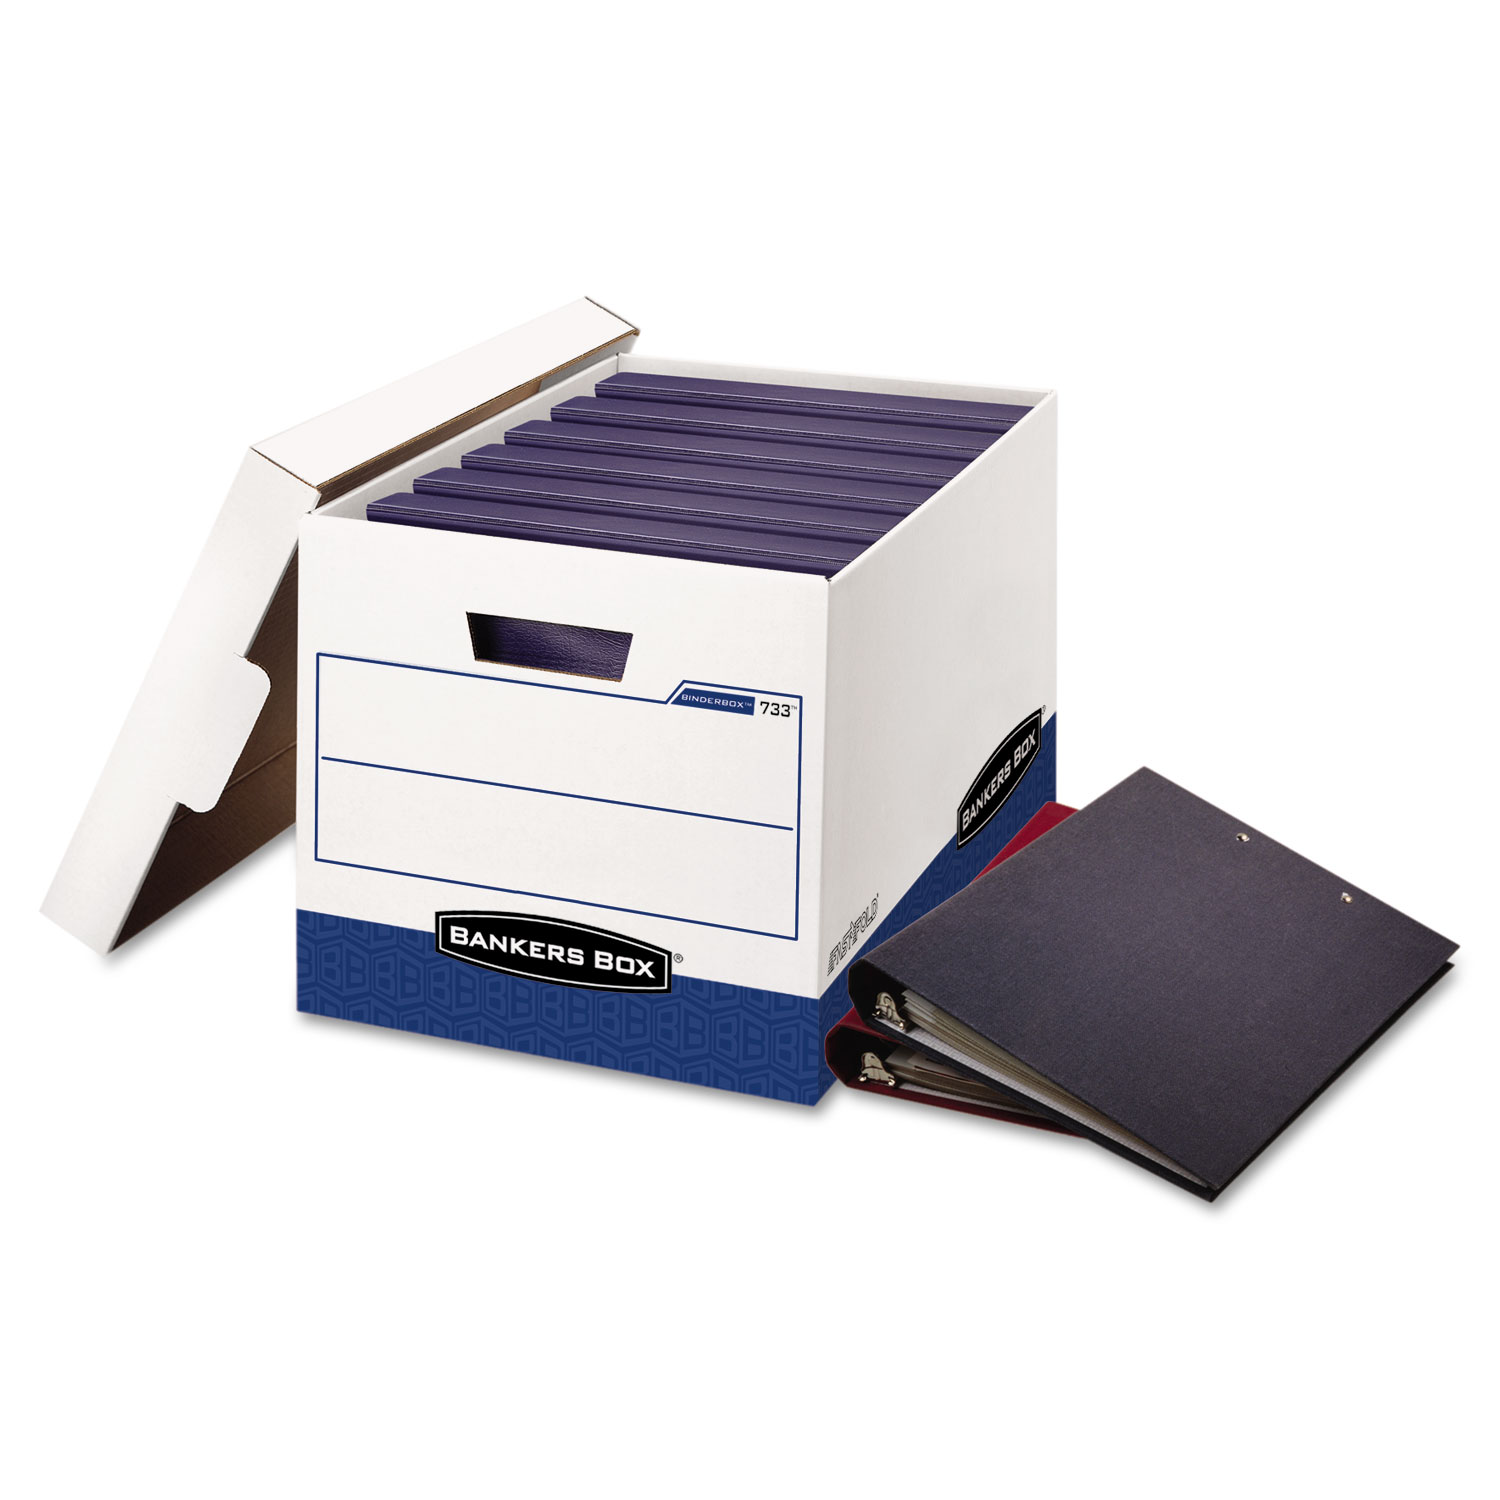  Bankers Box 0073301 BINDERBOX Storage Boxes, Letter Files, 13.13 x 20.13 x 12.38, White/Blue, 12/Carton (FEL0073301) 